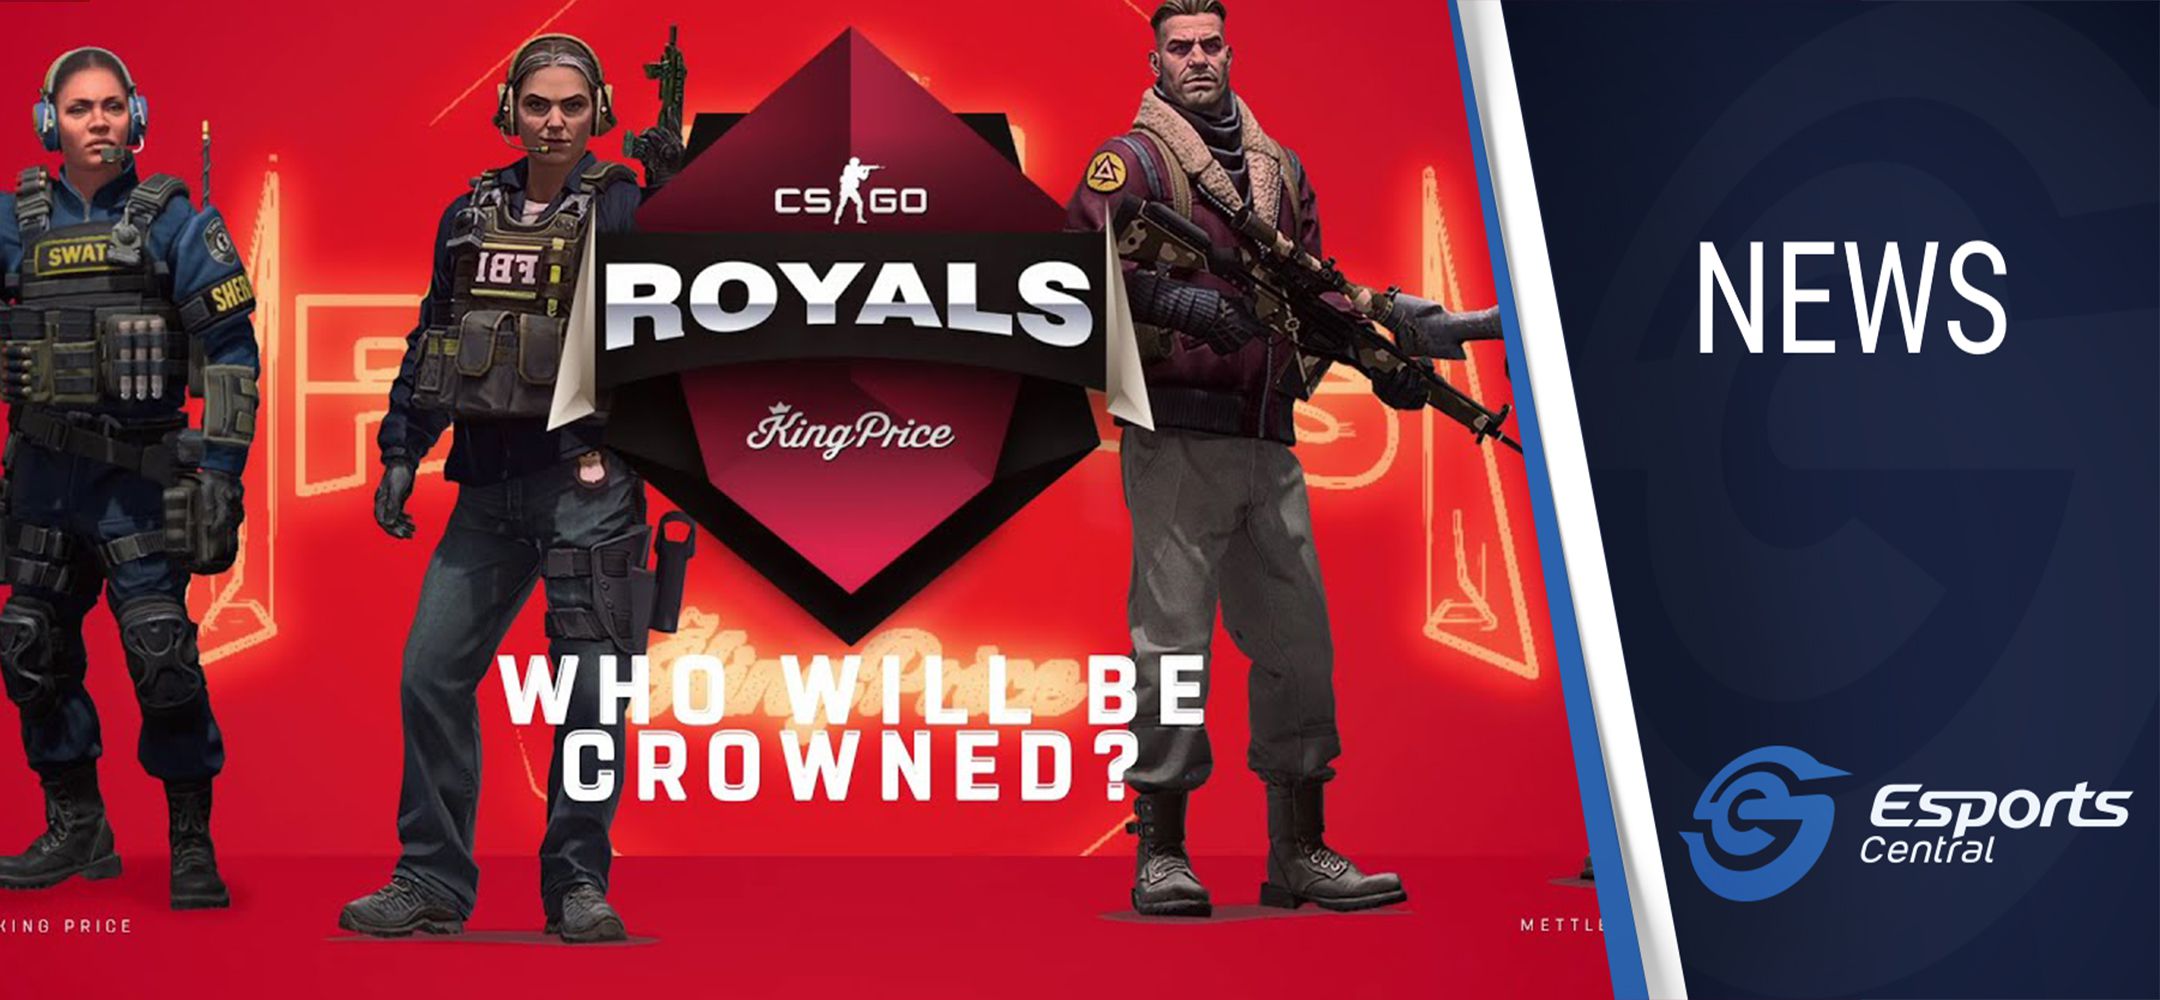 King Price CS:GO Royals